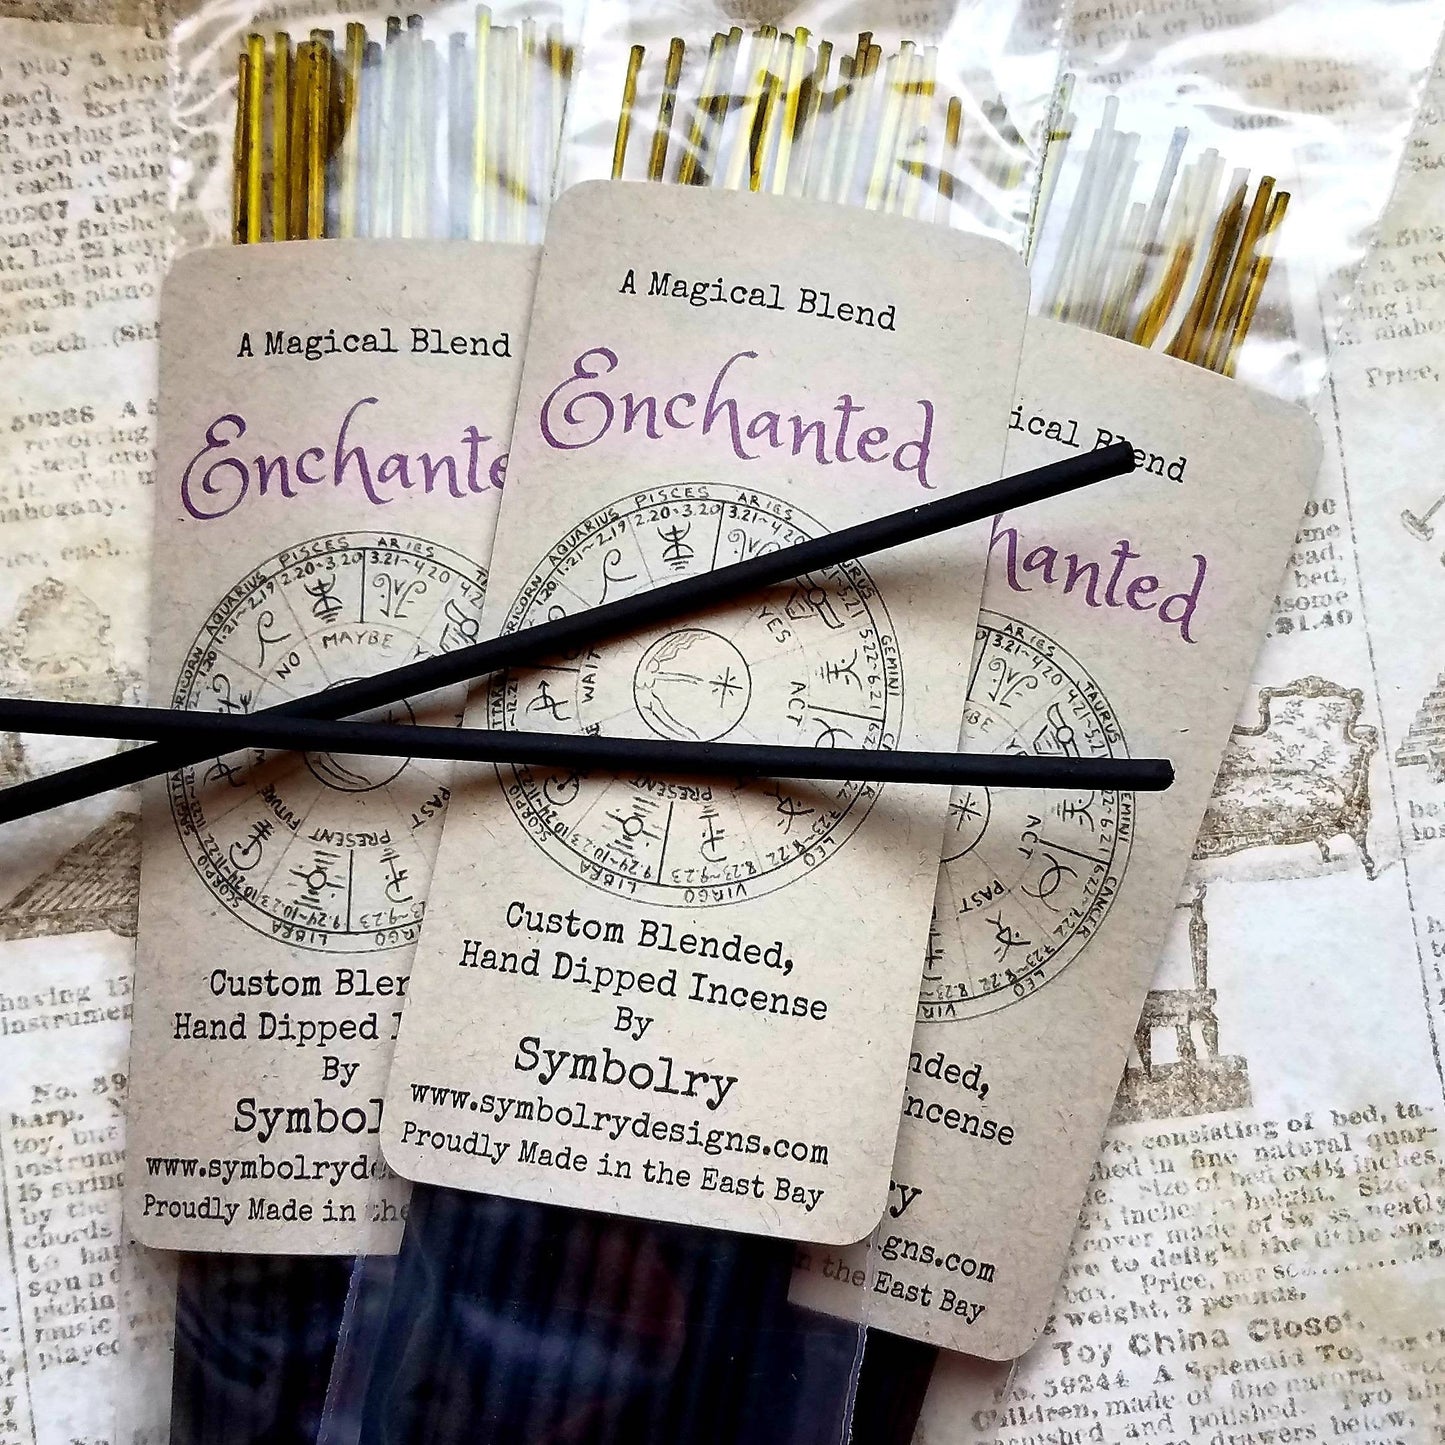 Enchanted - custom blend of sandalwood & other essential oils